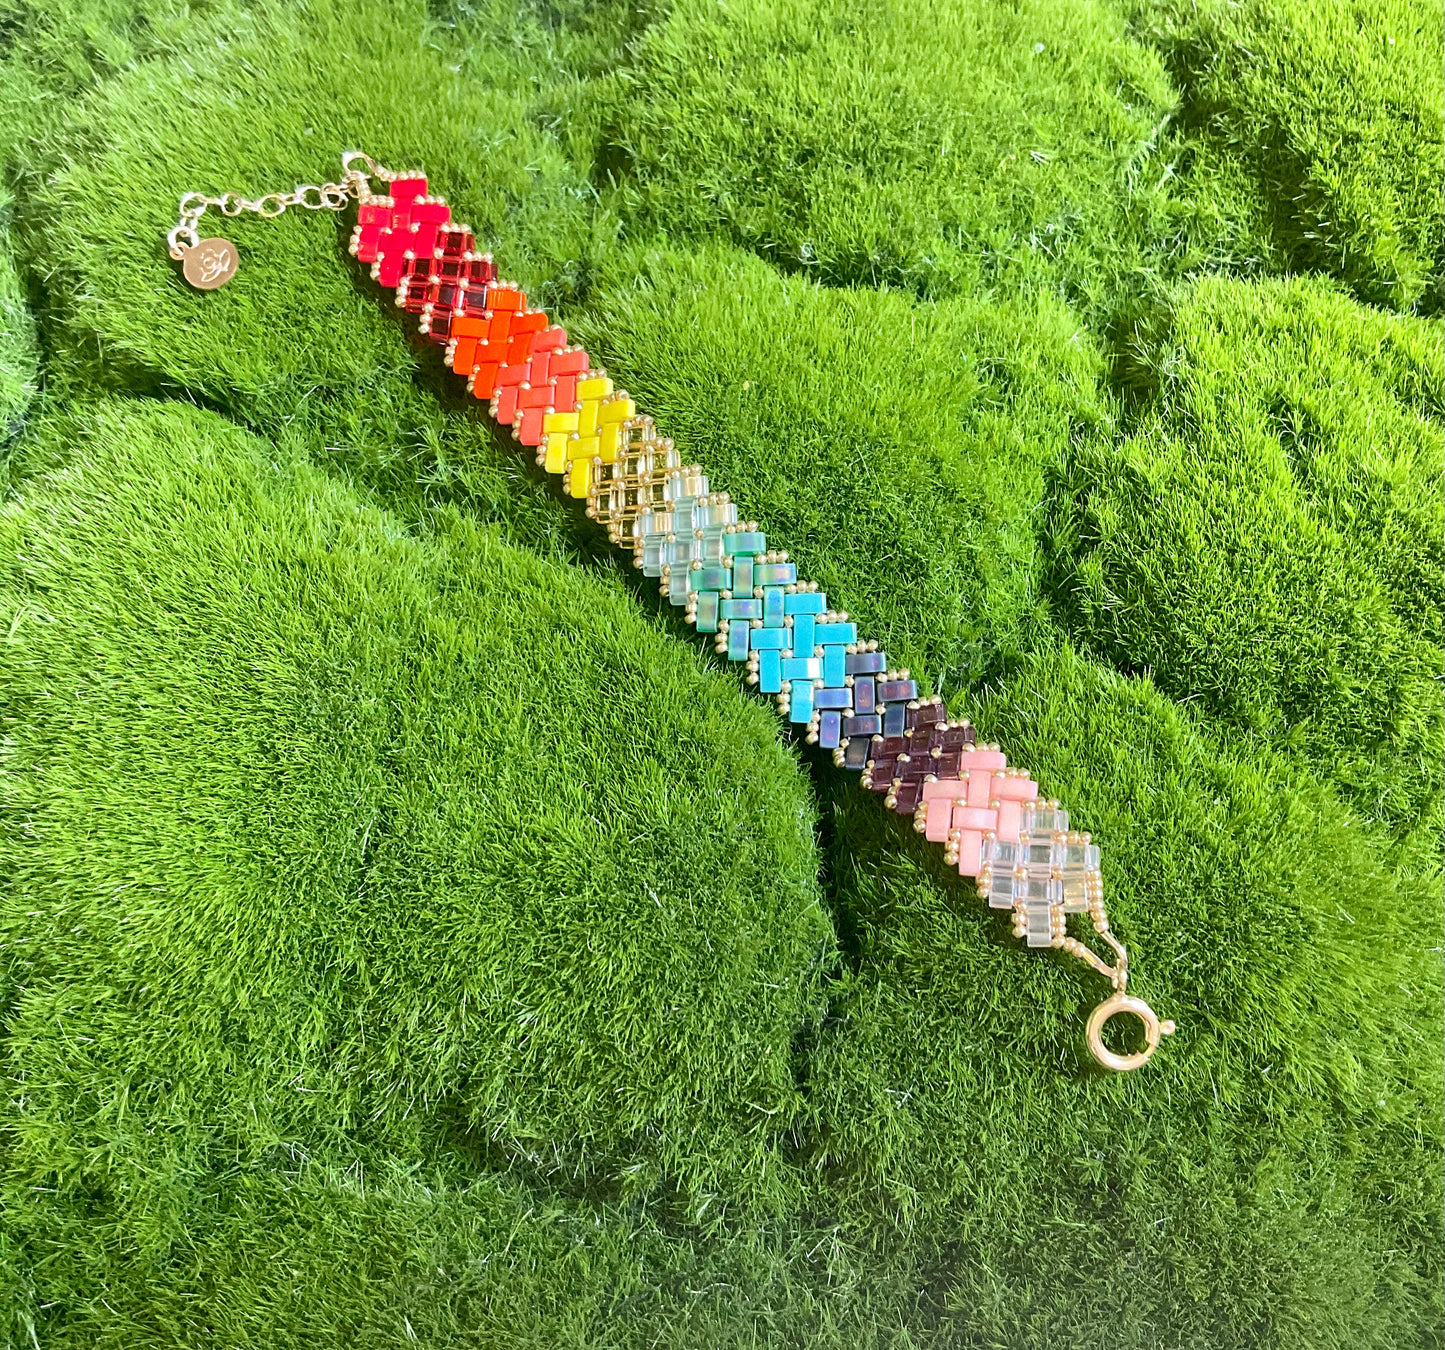 Rainbow Tila Hand-beaded Bracelet